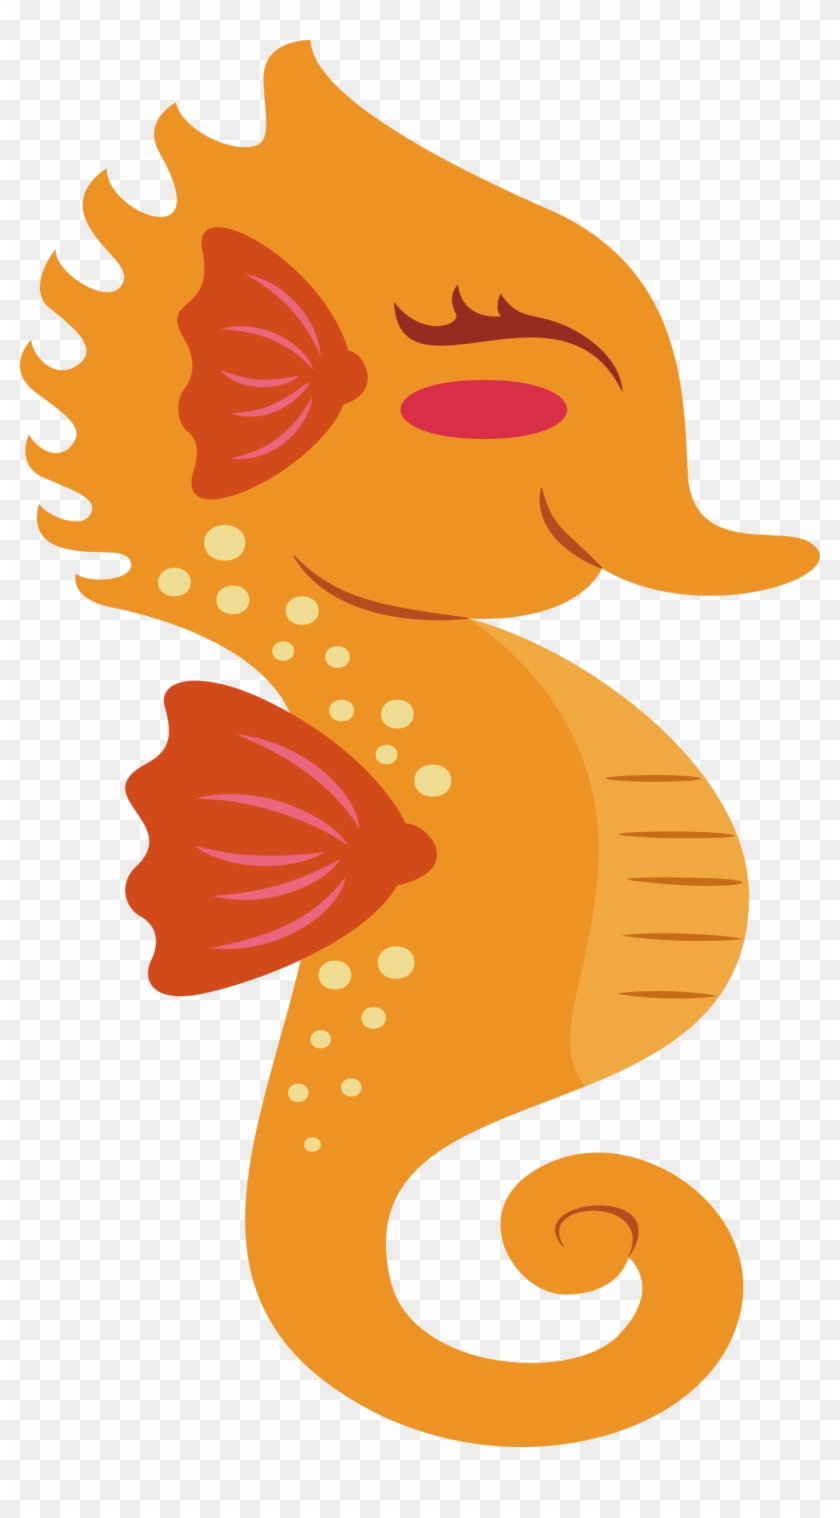 Dwarf Seahorse Orange Clip Art - Dwarf Seahorse Orange Clip Art #399925